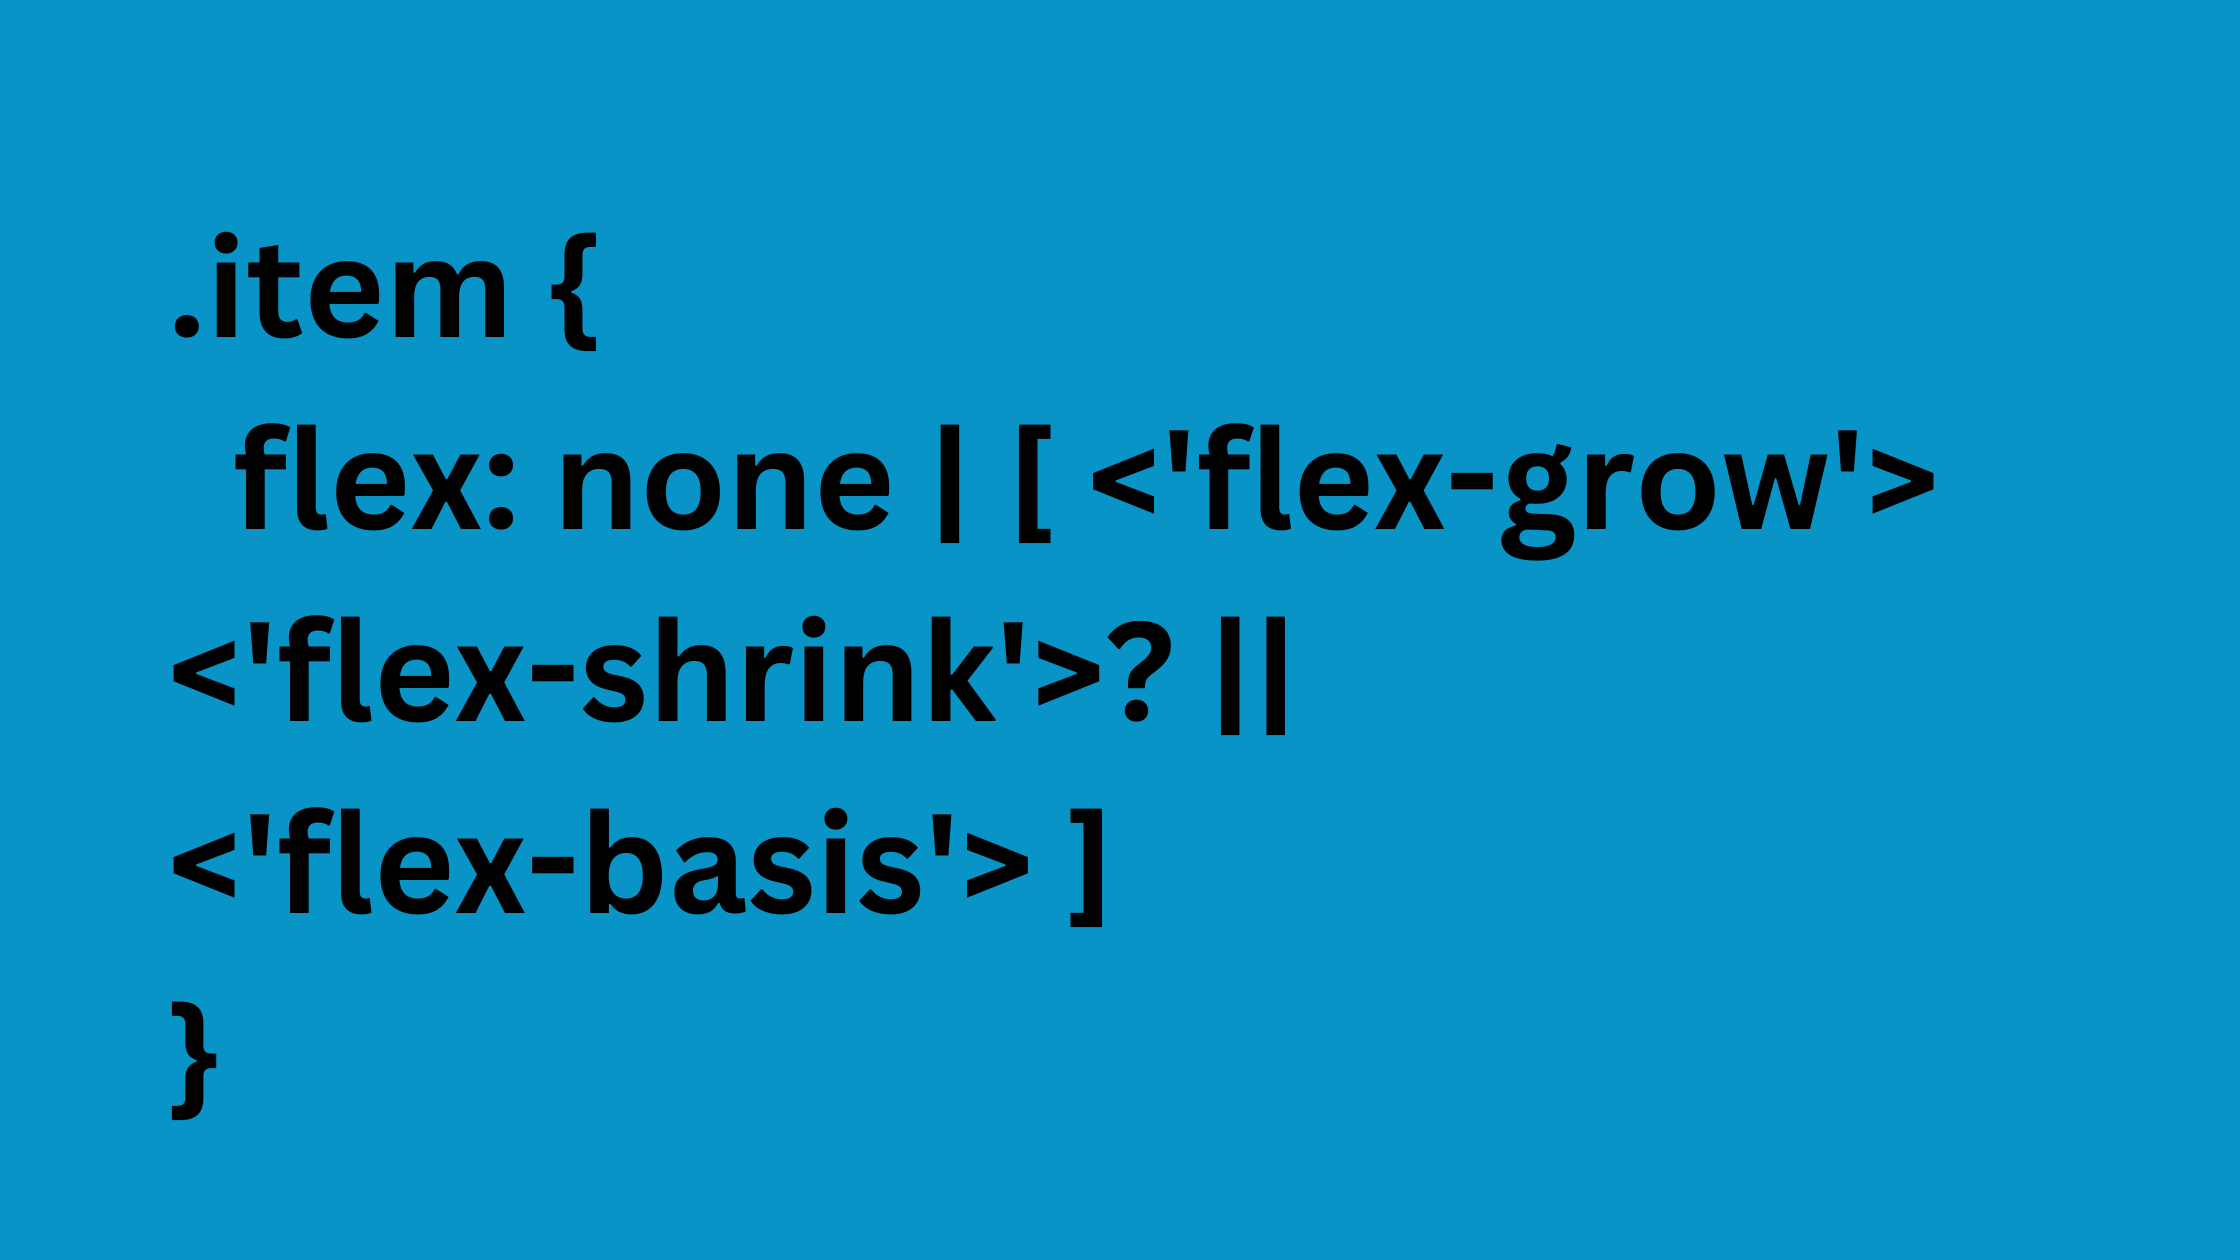 Flex basis code